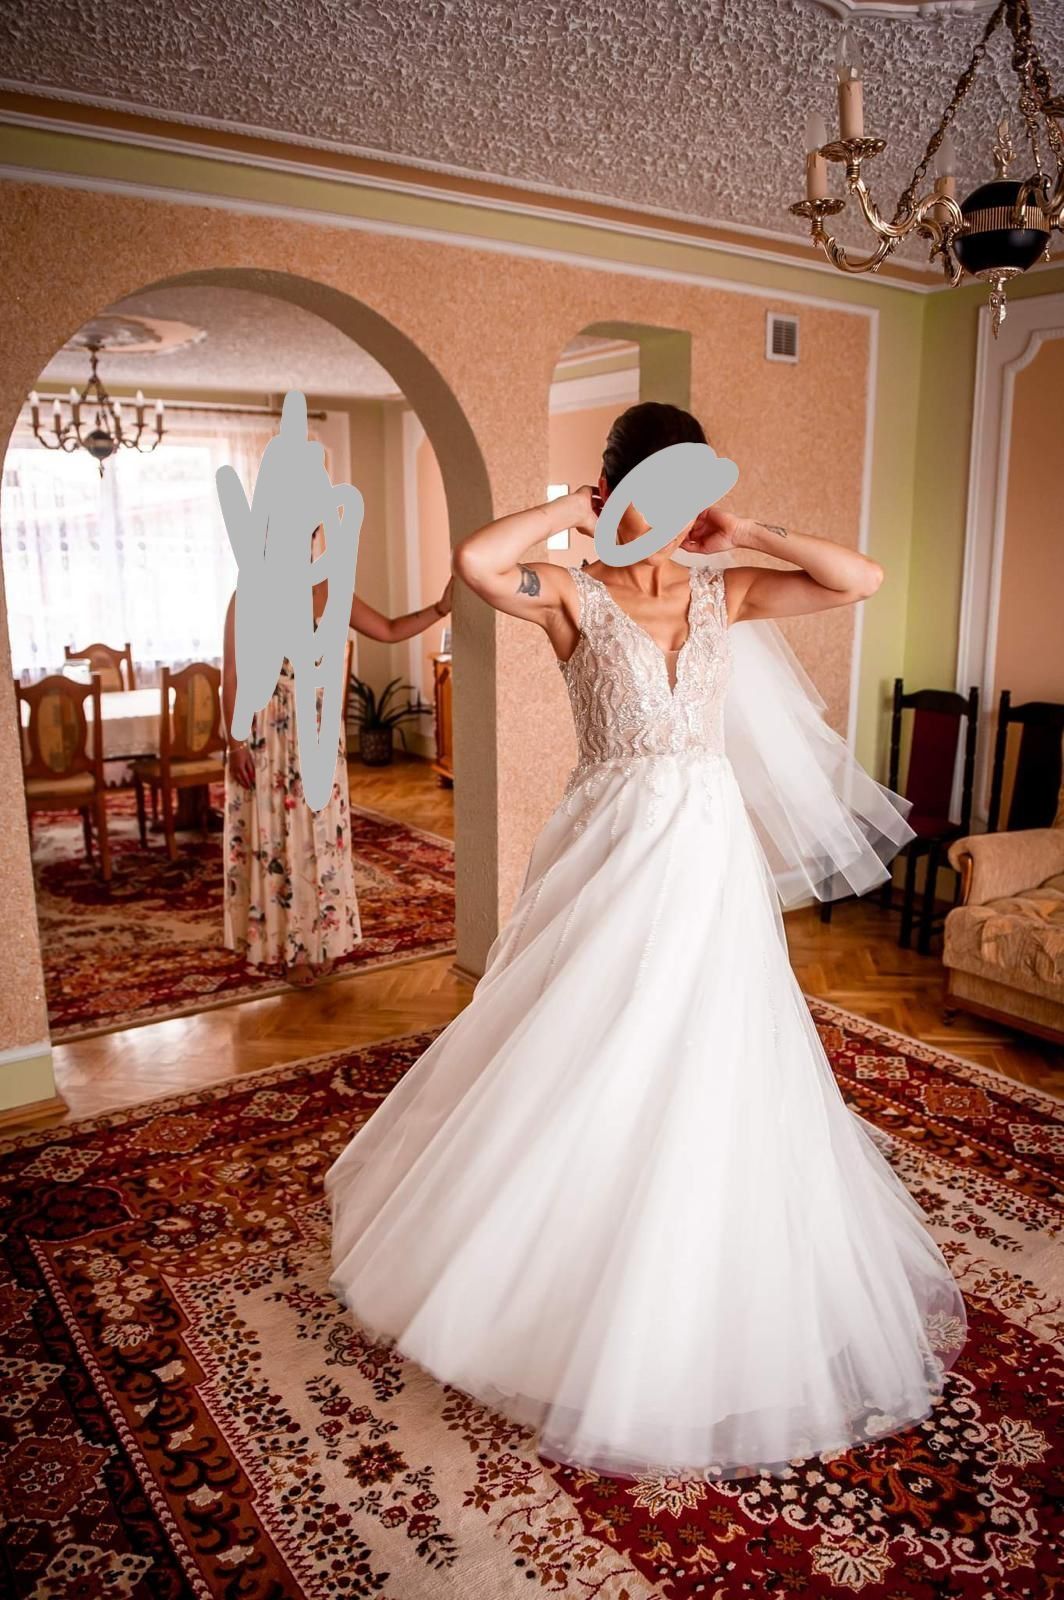 Piękna suknia ślubna z salonu Mariposa (sprxedam lub zamienie)